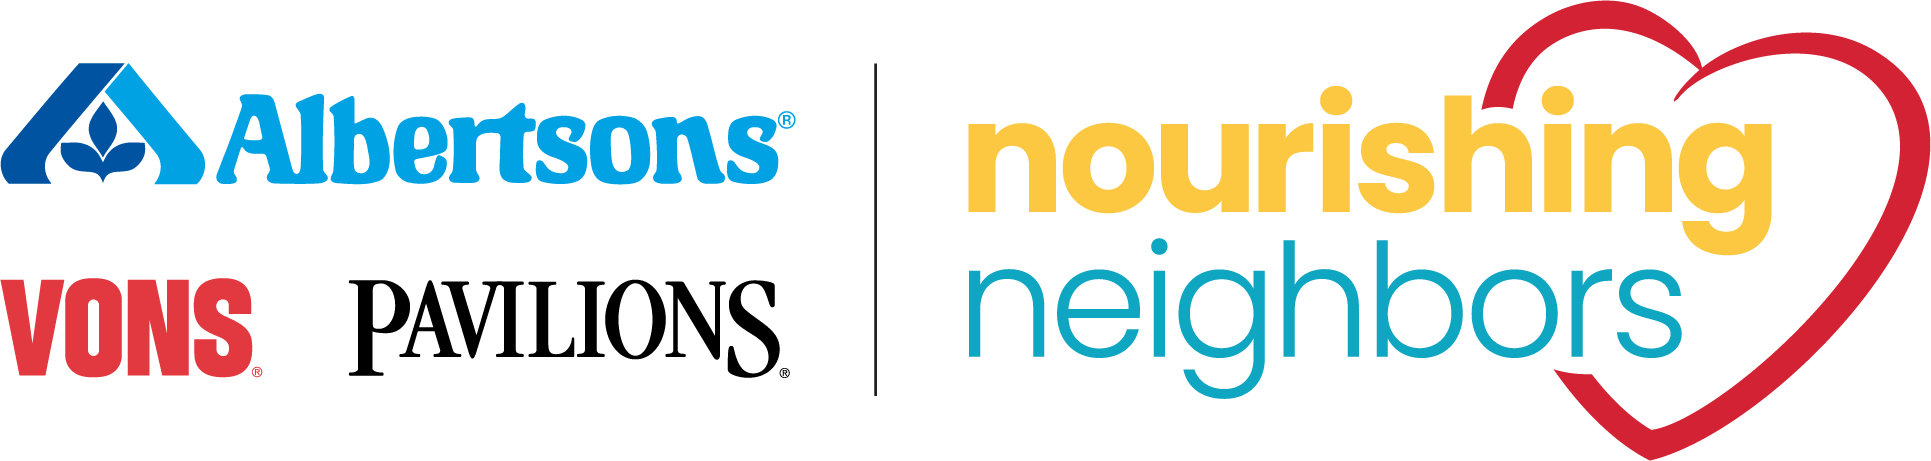 NourishingNeighbors_ALB_PAV_VONS-RGB.png